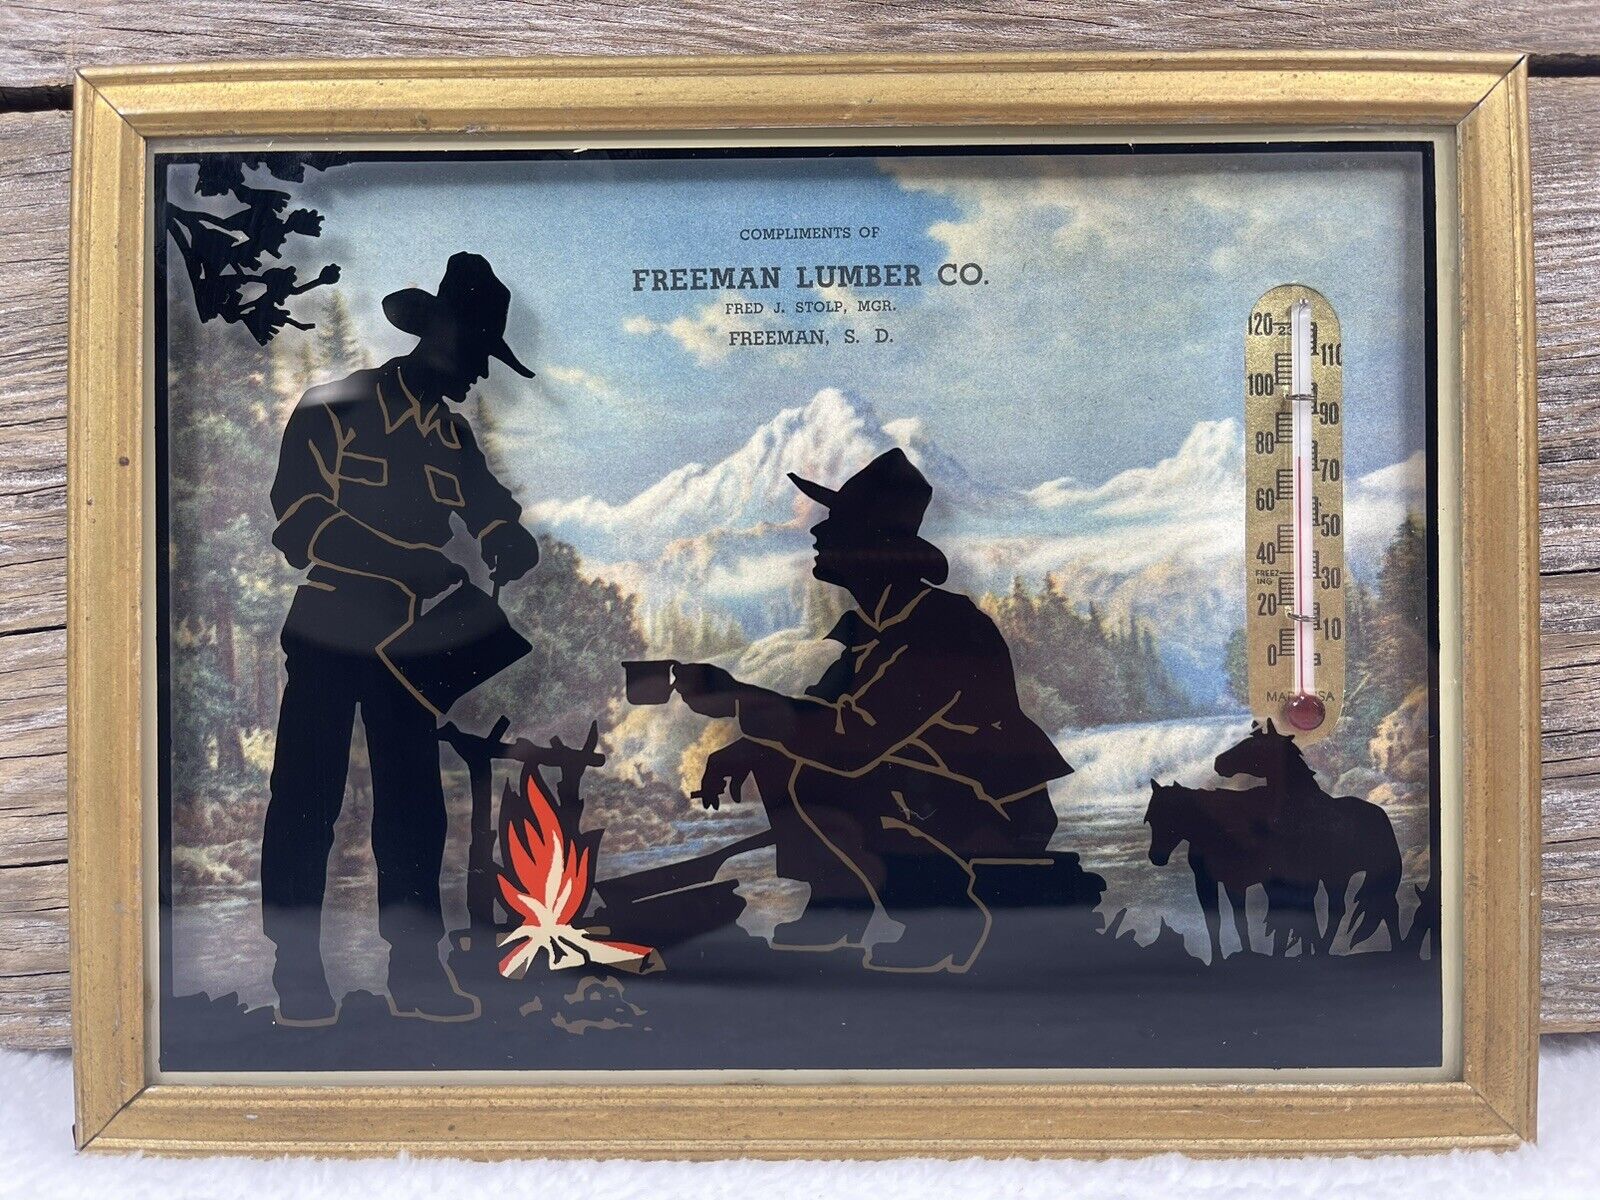 VTG Freeman South Dakota Lumber Co Advertising Piece Fred  J Stolp Manager